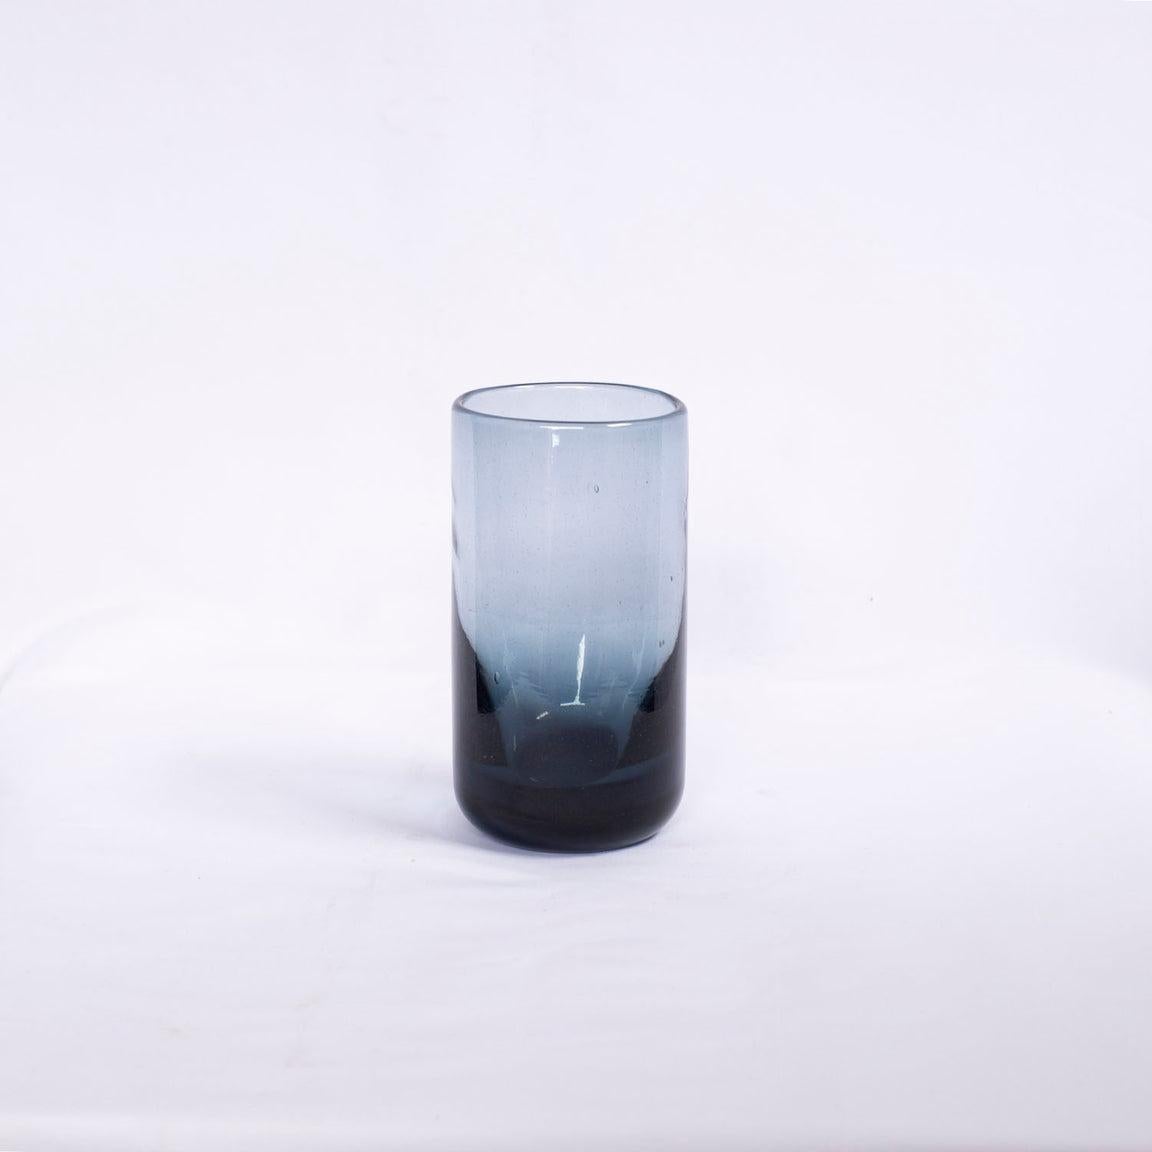 Glass flower vase designed by Claude Morin. Signed on the bottom. 1960-1970's. France.